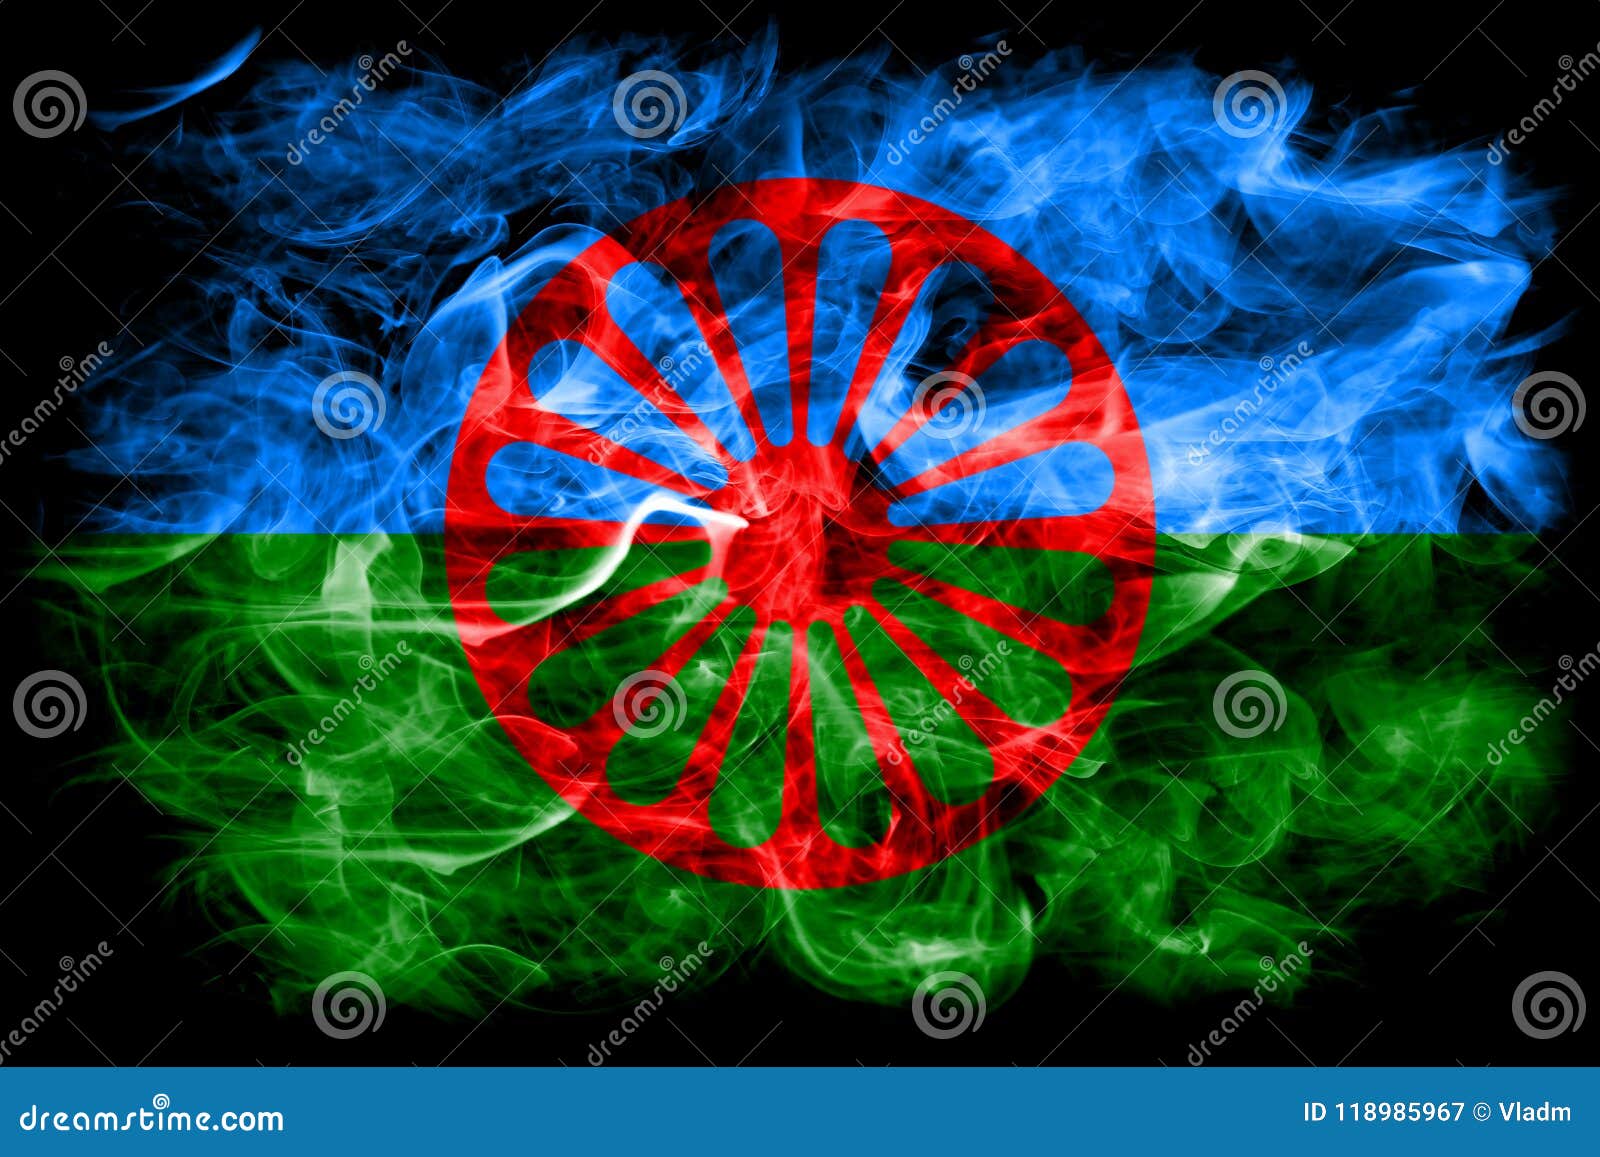 Цыганский Флаг И Герб Фото